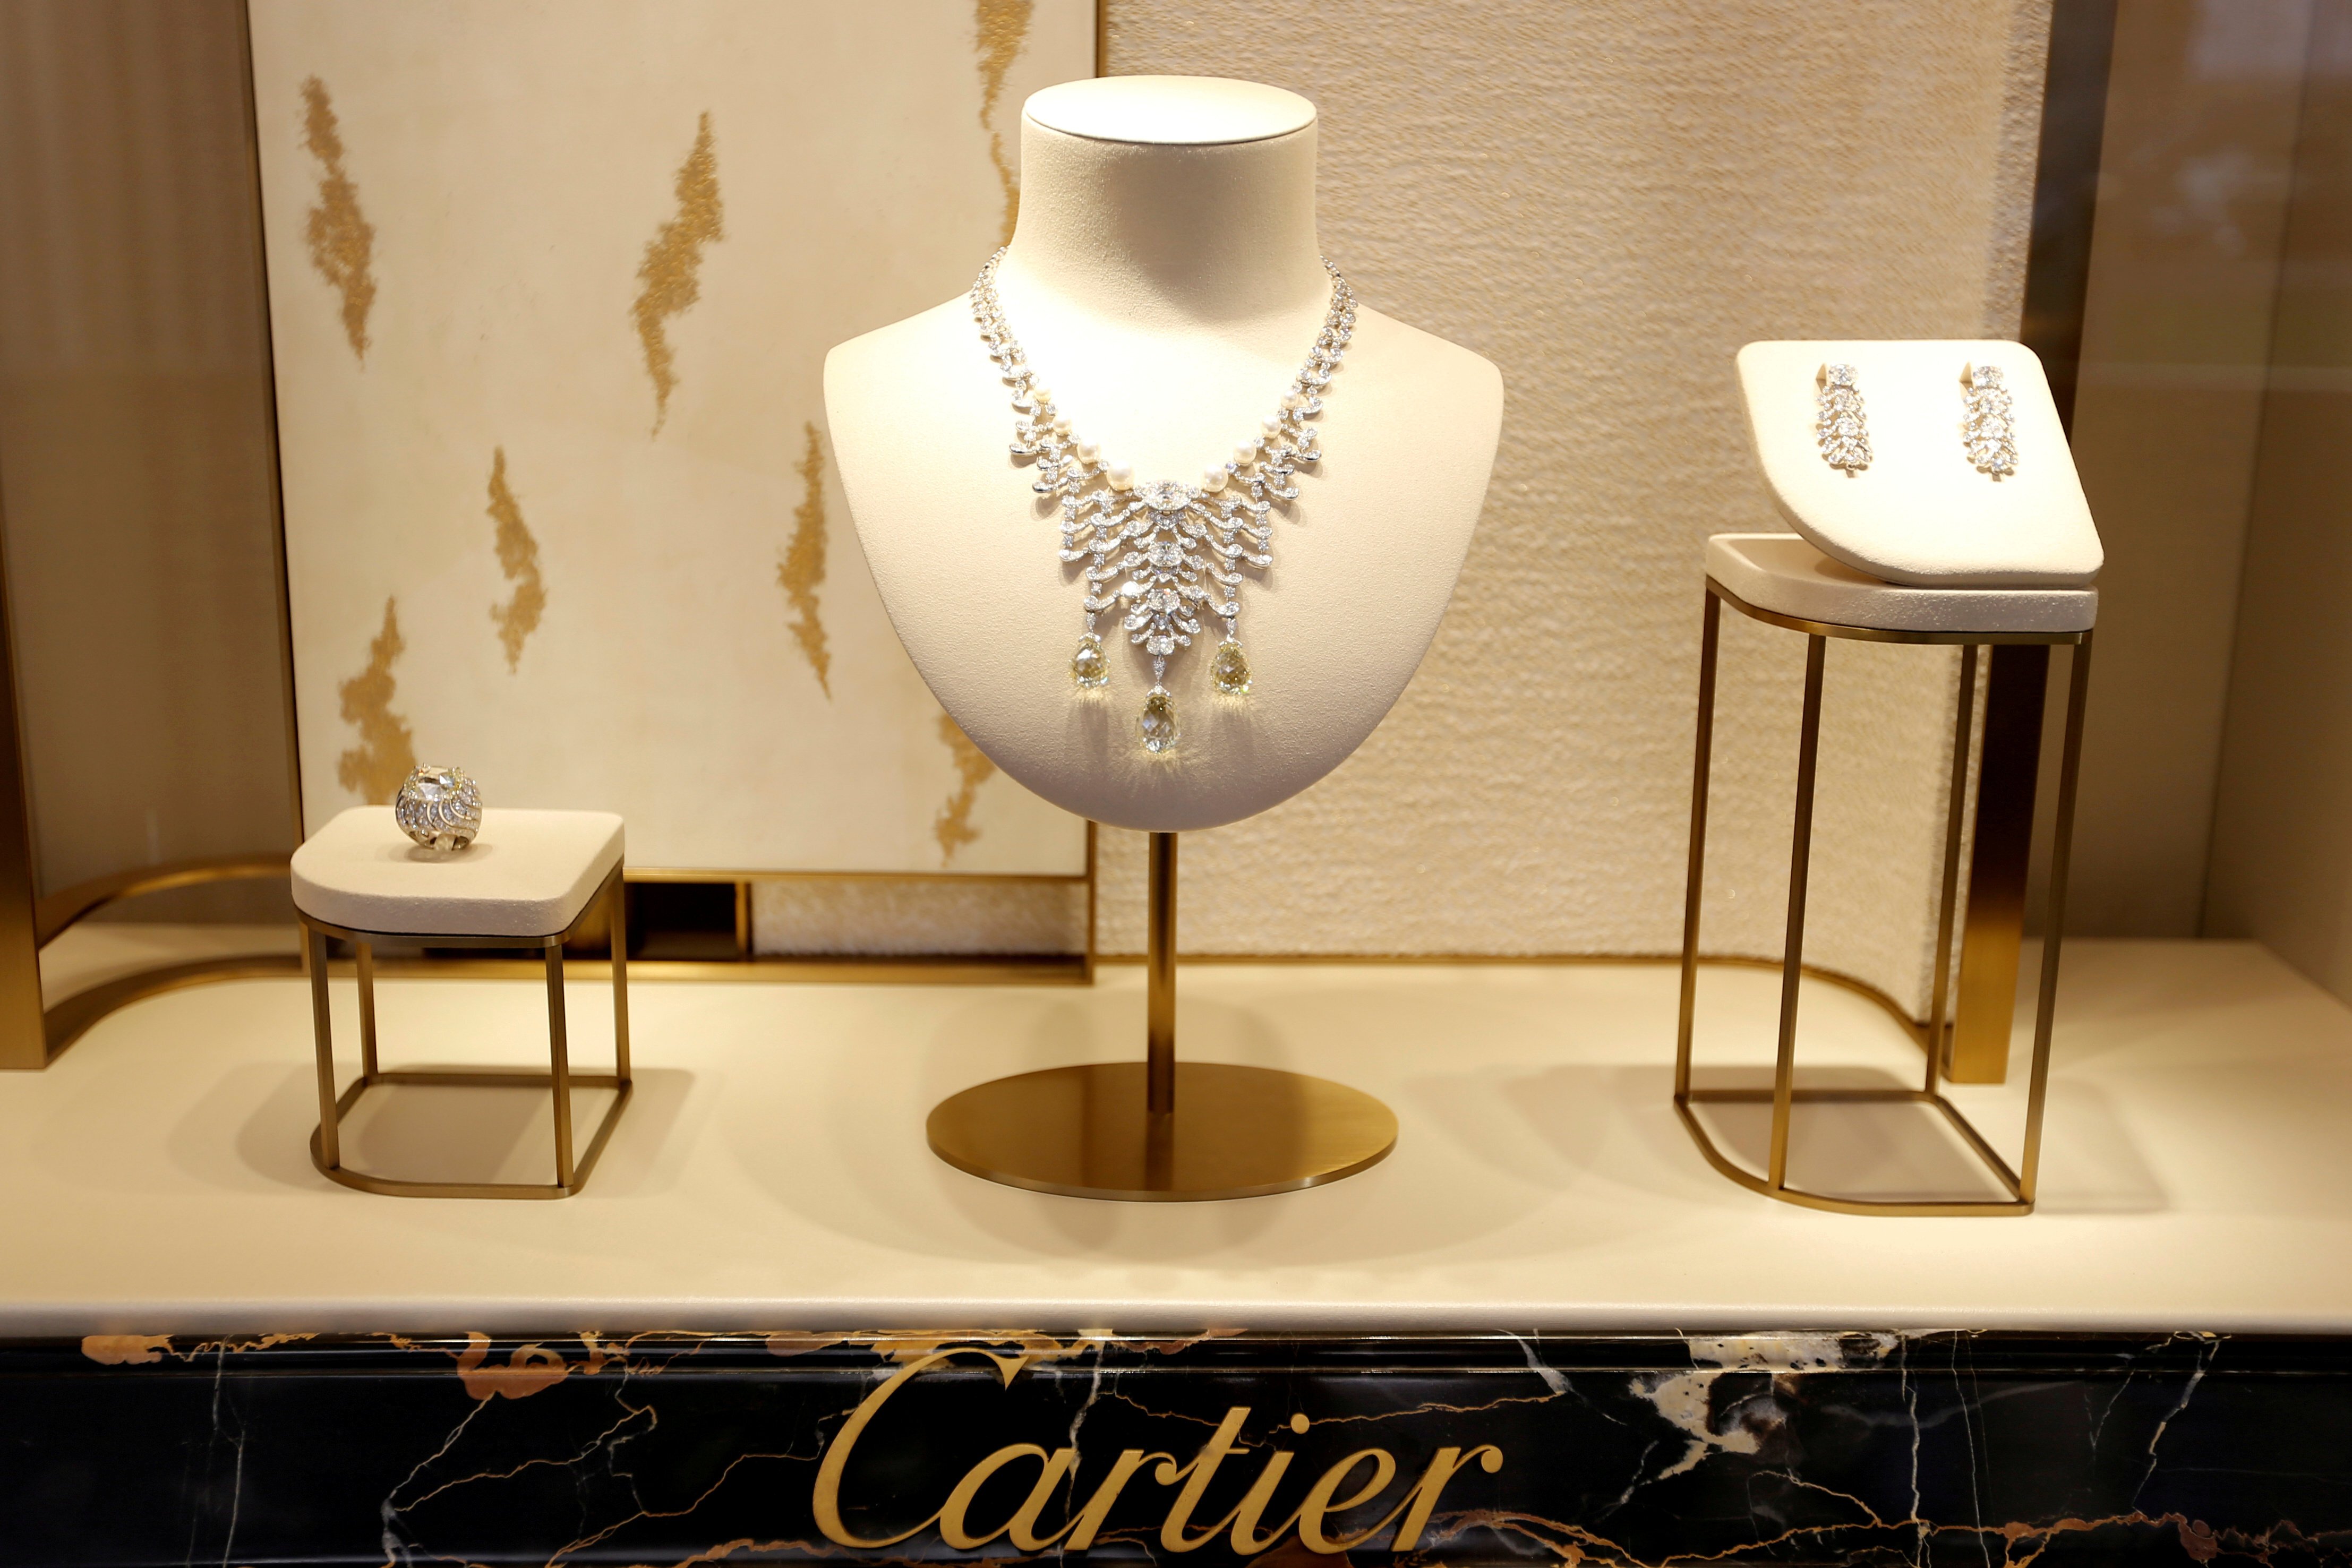 Louis Vuitton, Cartier, Prada to Use Bespoke Blockchain to Tackle